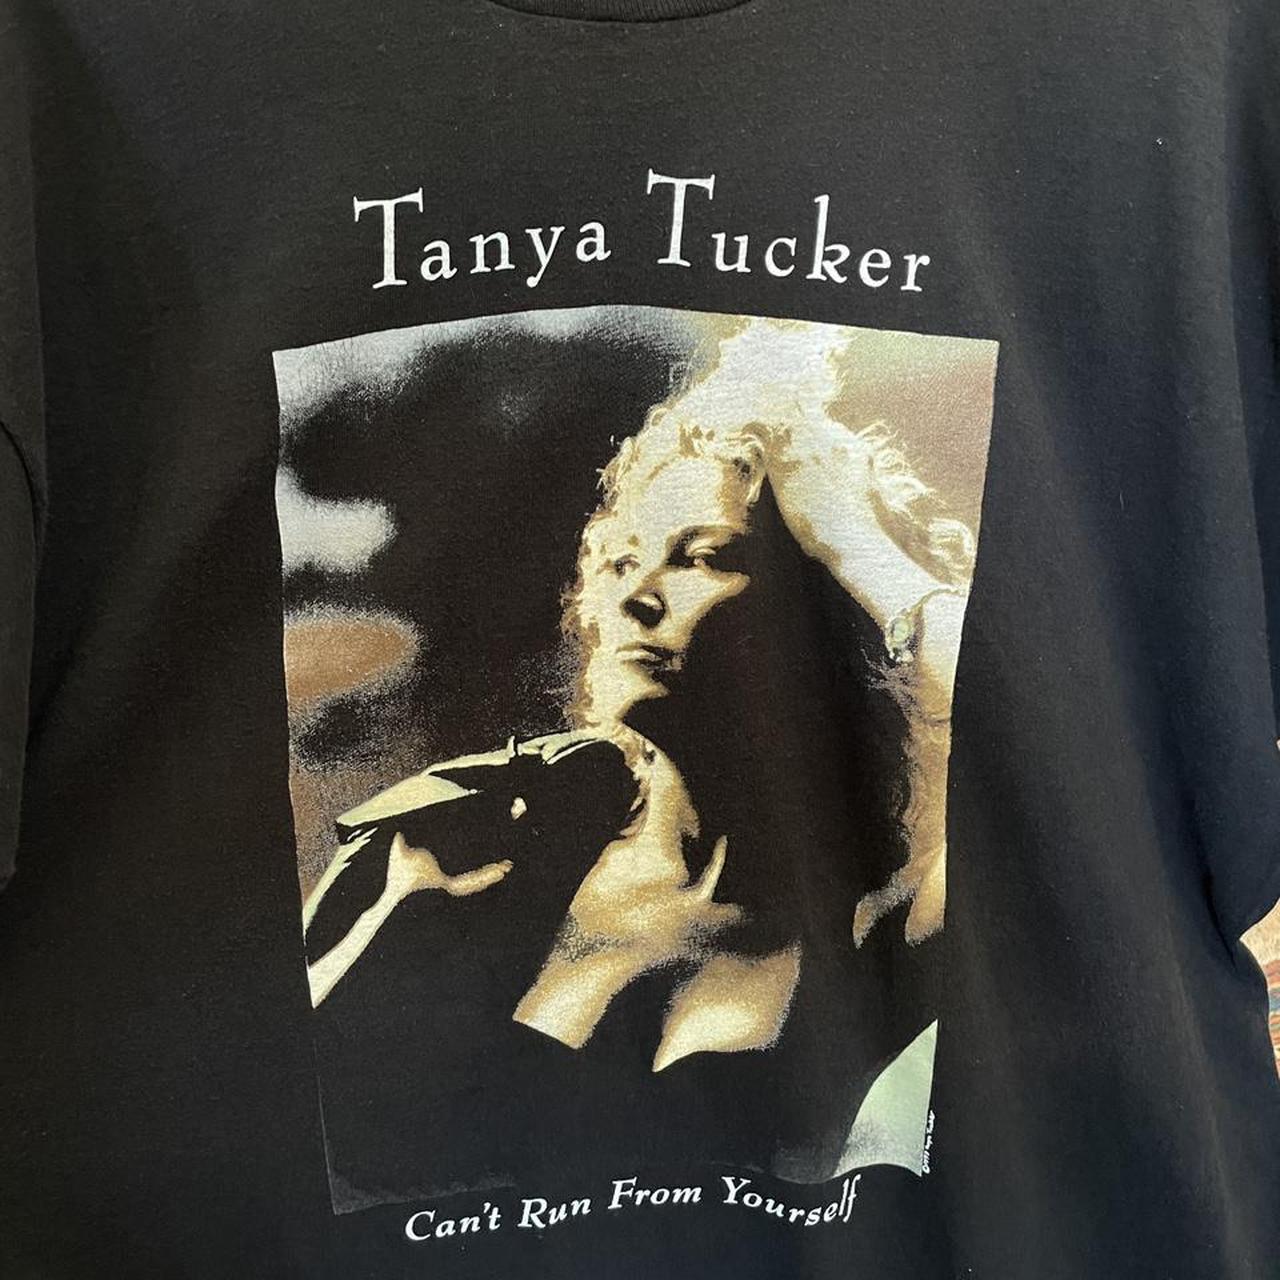 Product Image 2 - 1993 Tanya Tucker Tour Shirt

Size